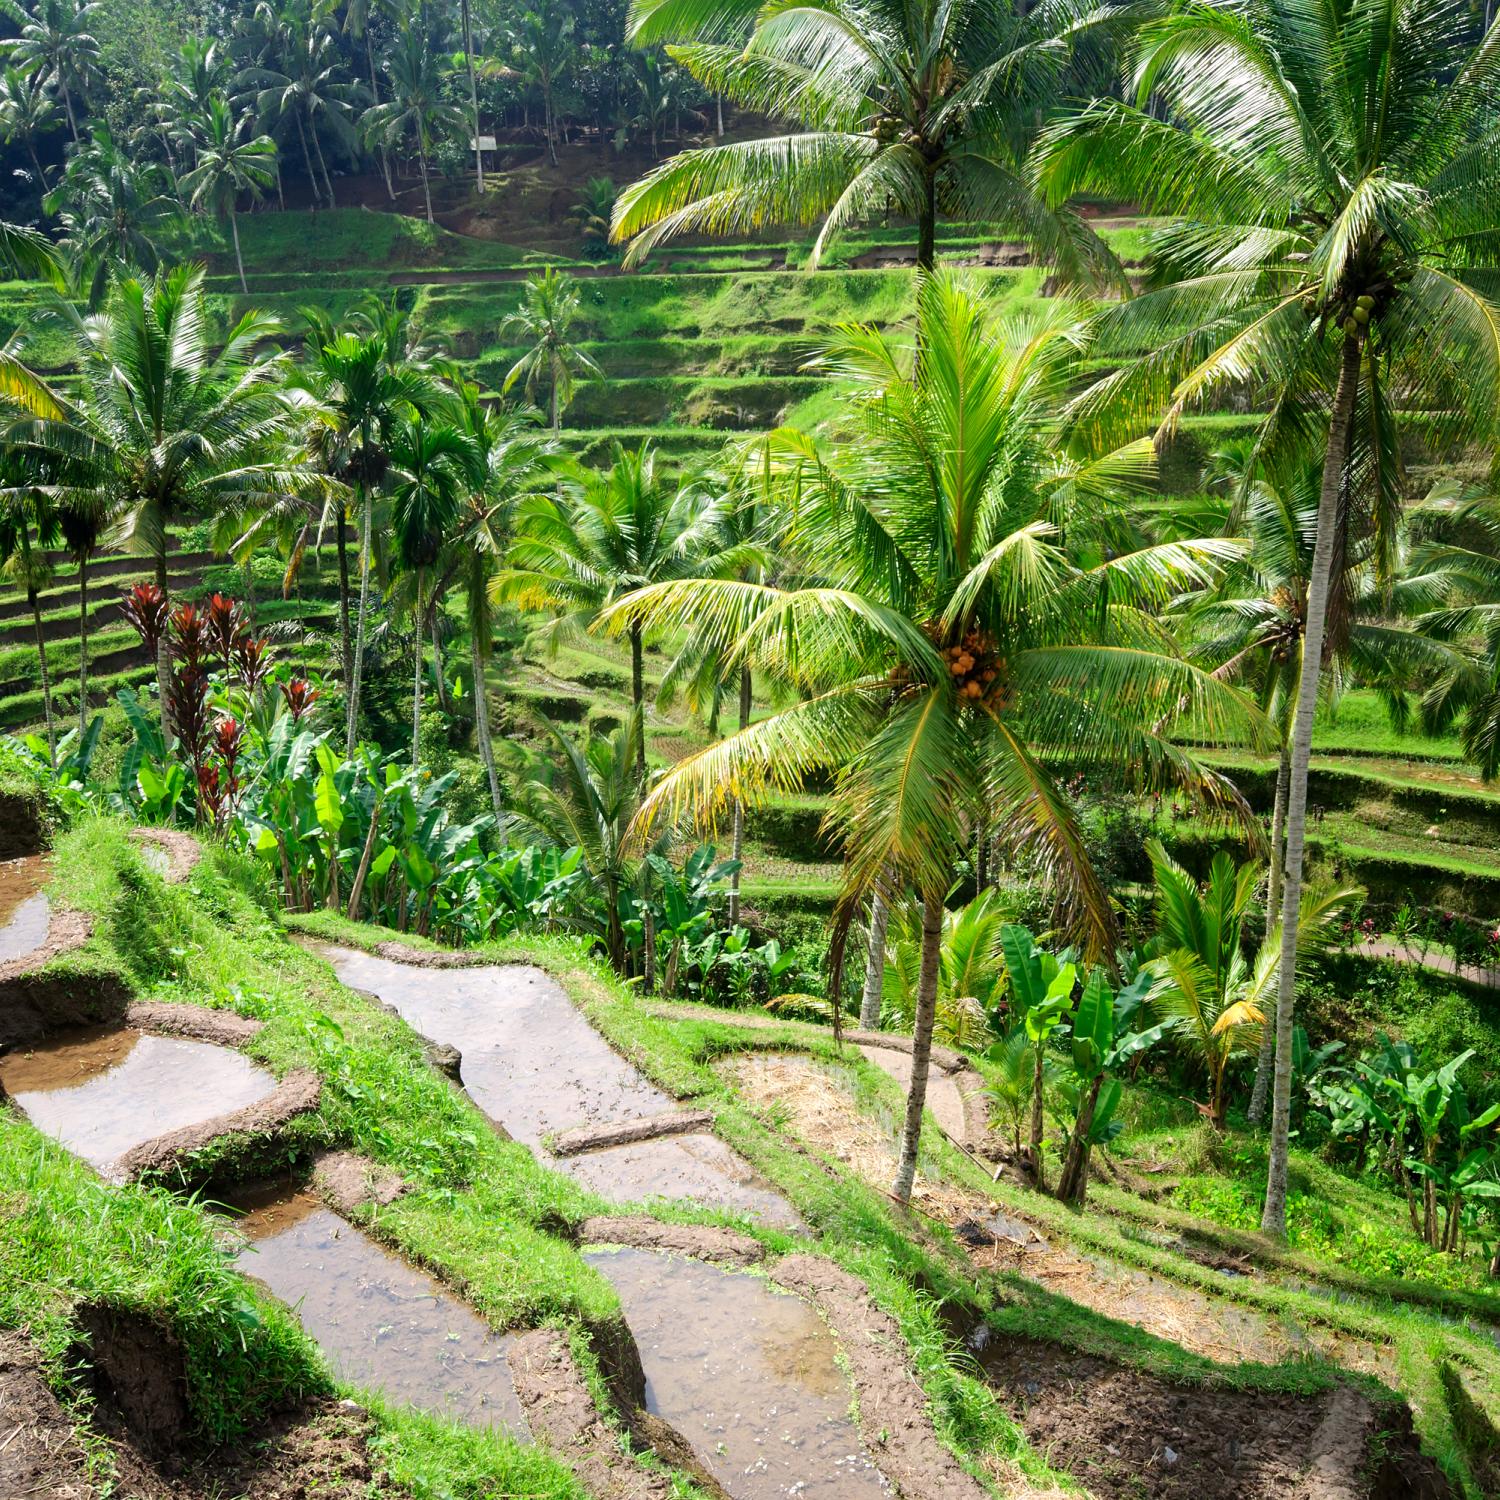 Trip to Bali |Tailored trips Indonesia